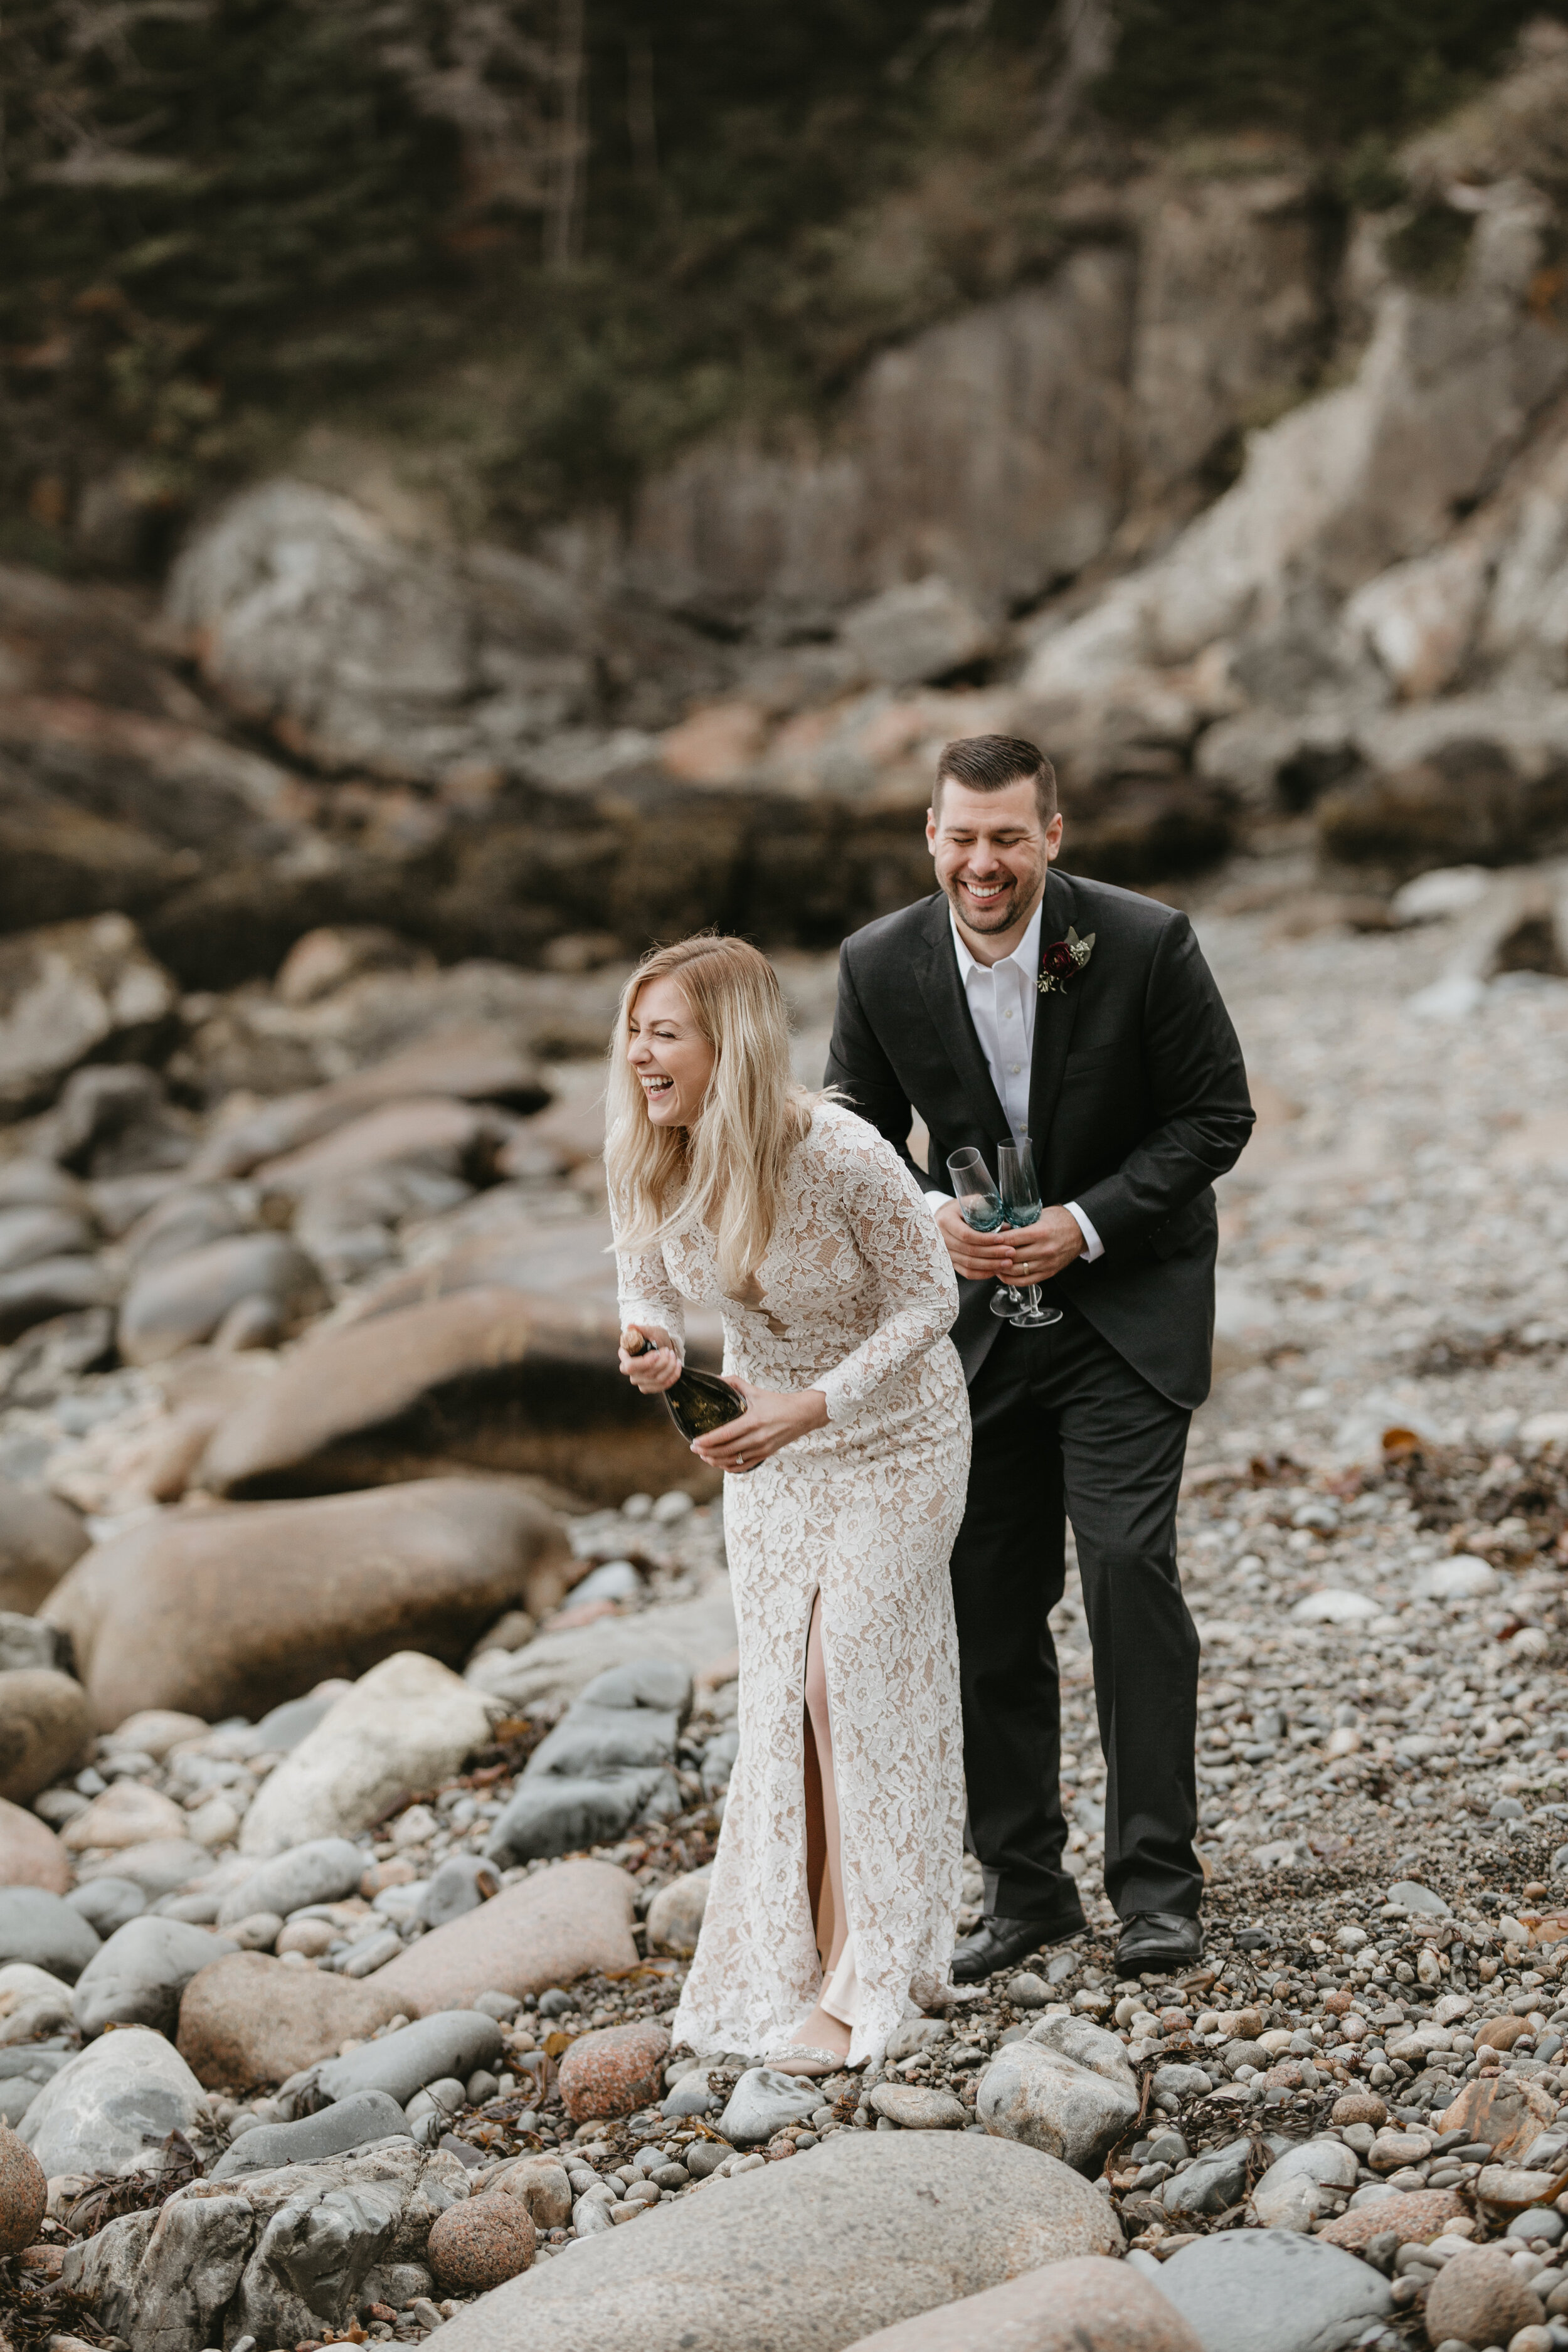 Nicole-Daacke-Photography-Acadia-national-park-elopement-photography-elopement-in-acadia-inspiration-maine-intimate-wedding-destination-elopement-photographer-rainy-day-maine-coast-bar-harbor-elopement-photography-182.jpg